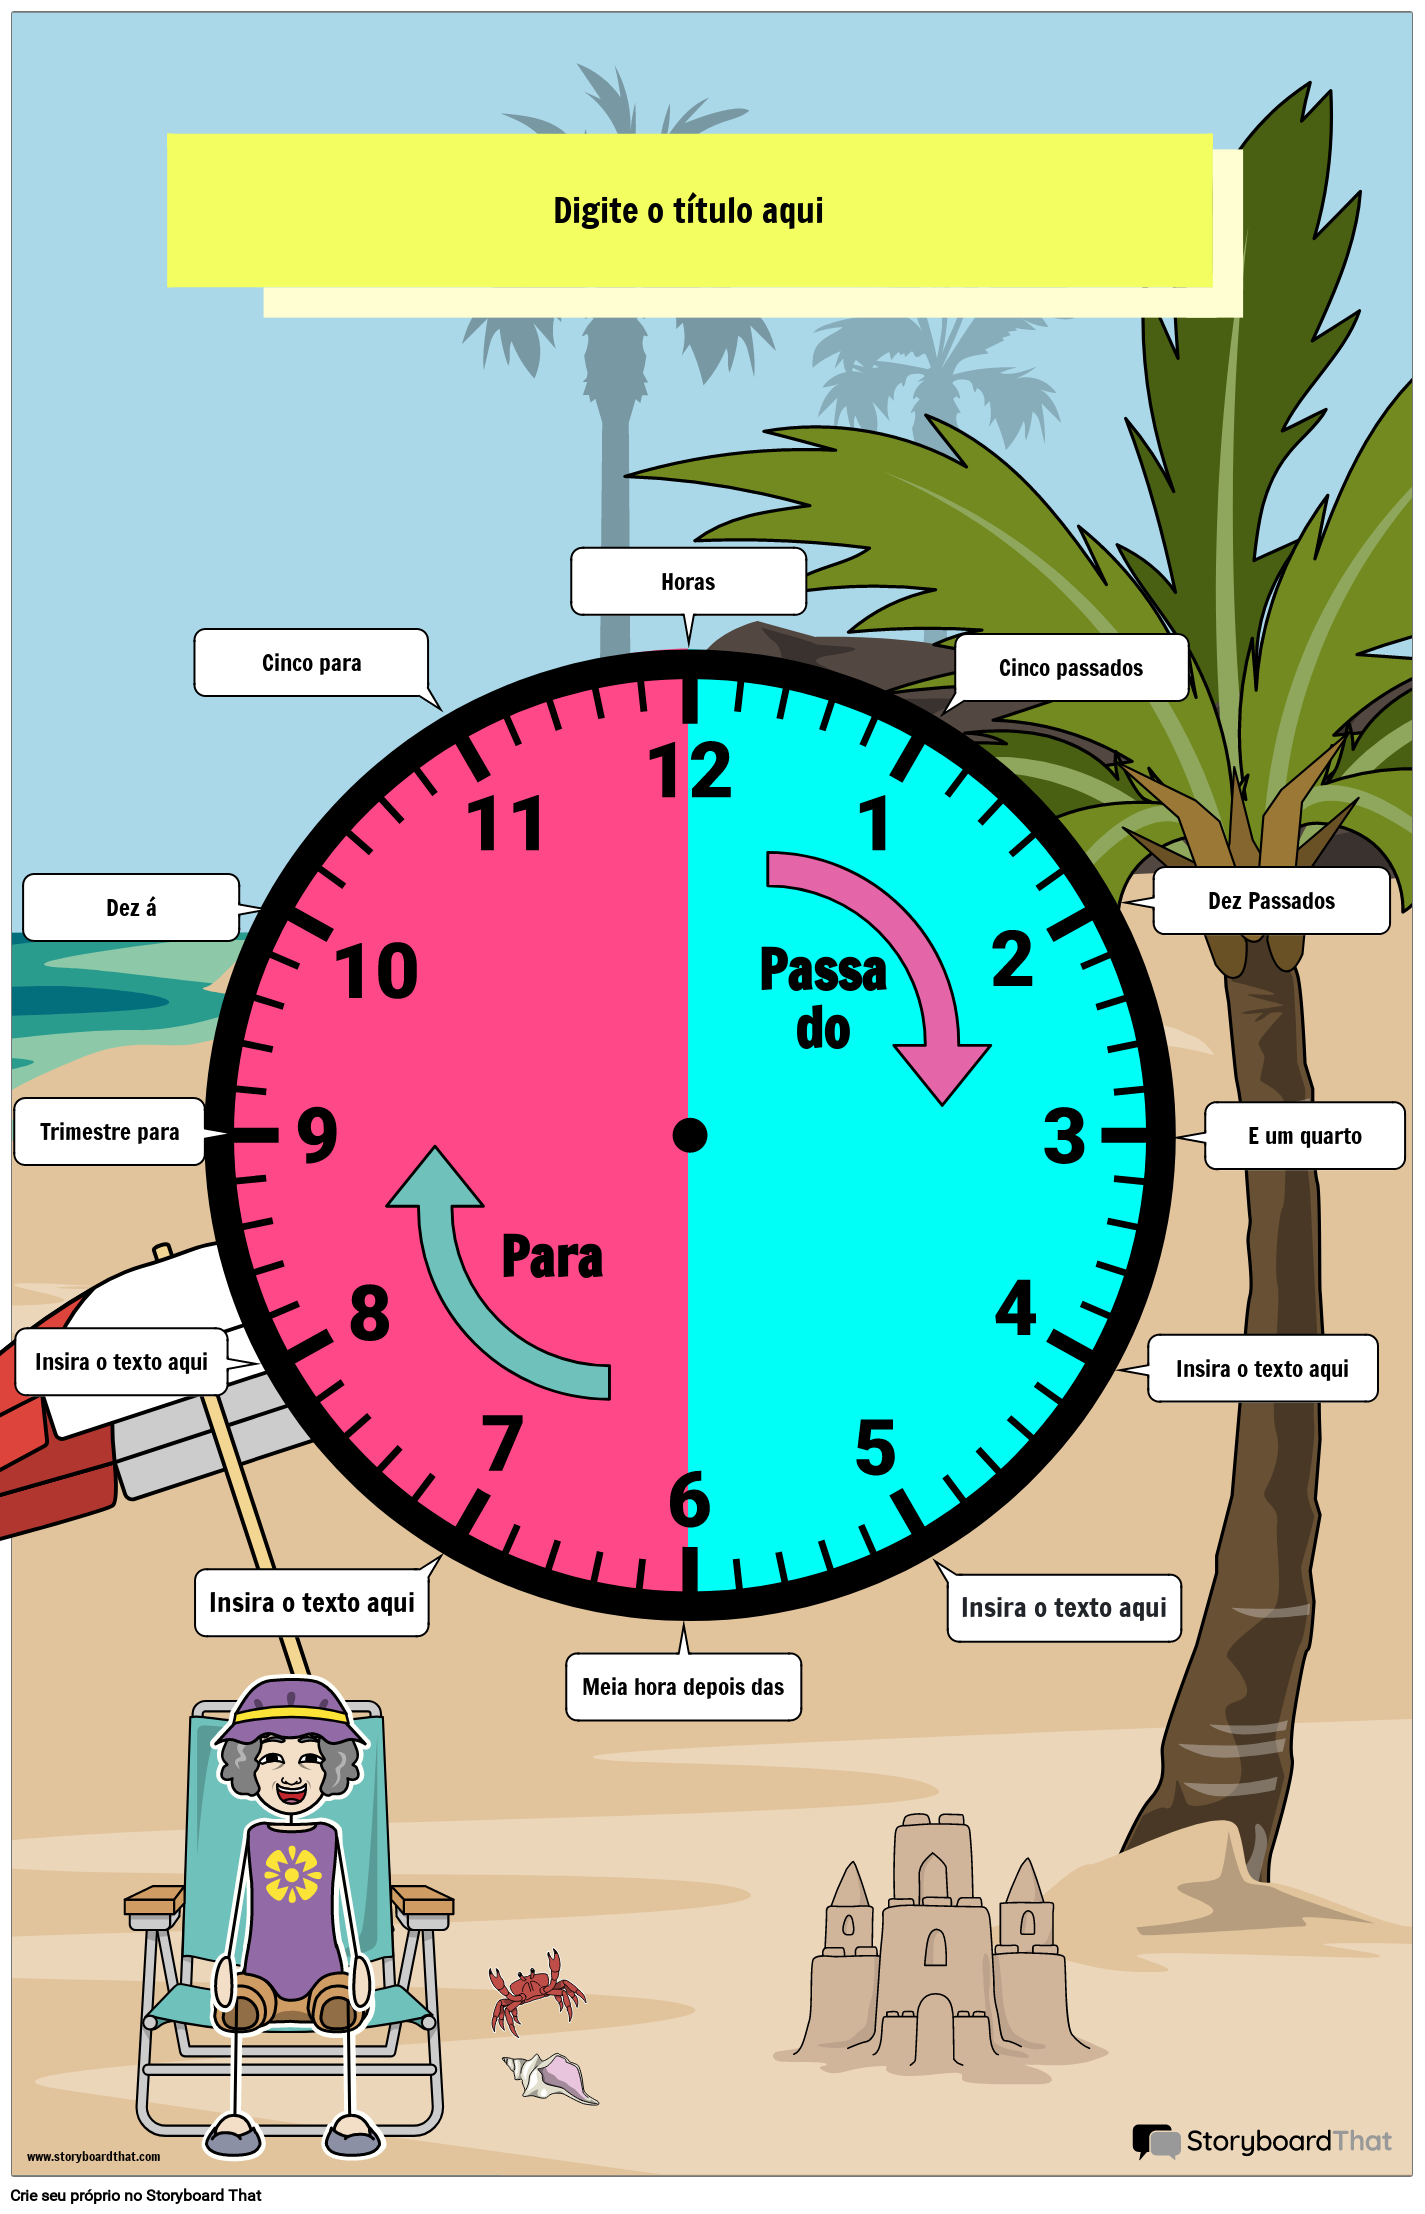 Póster Tema praia - Diga as horas